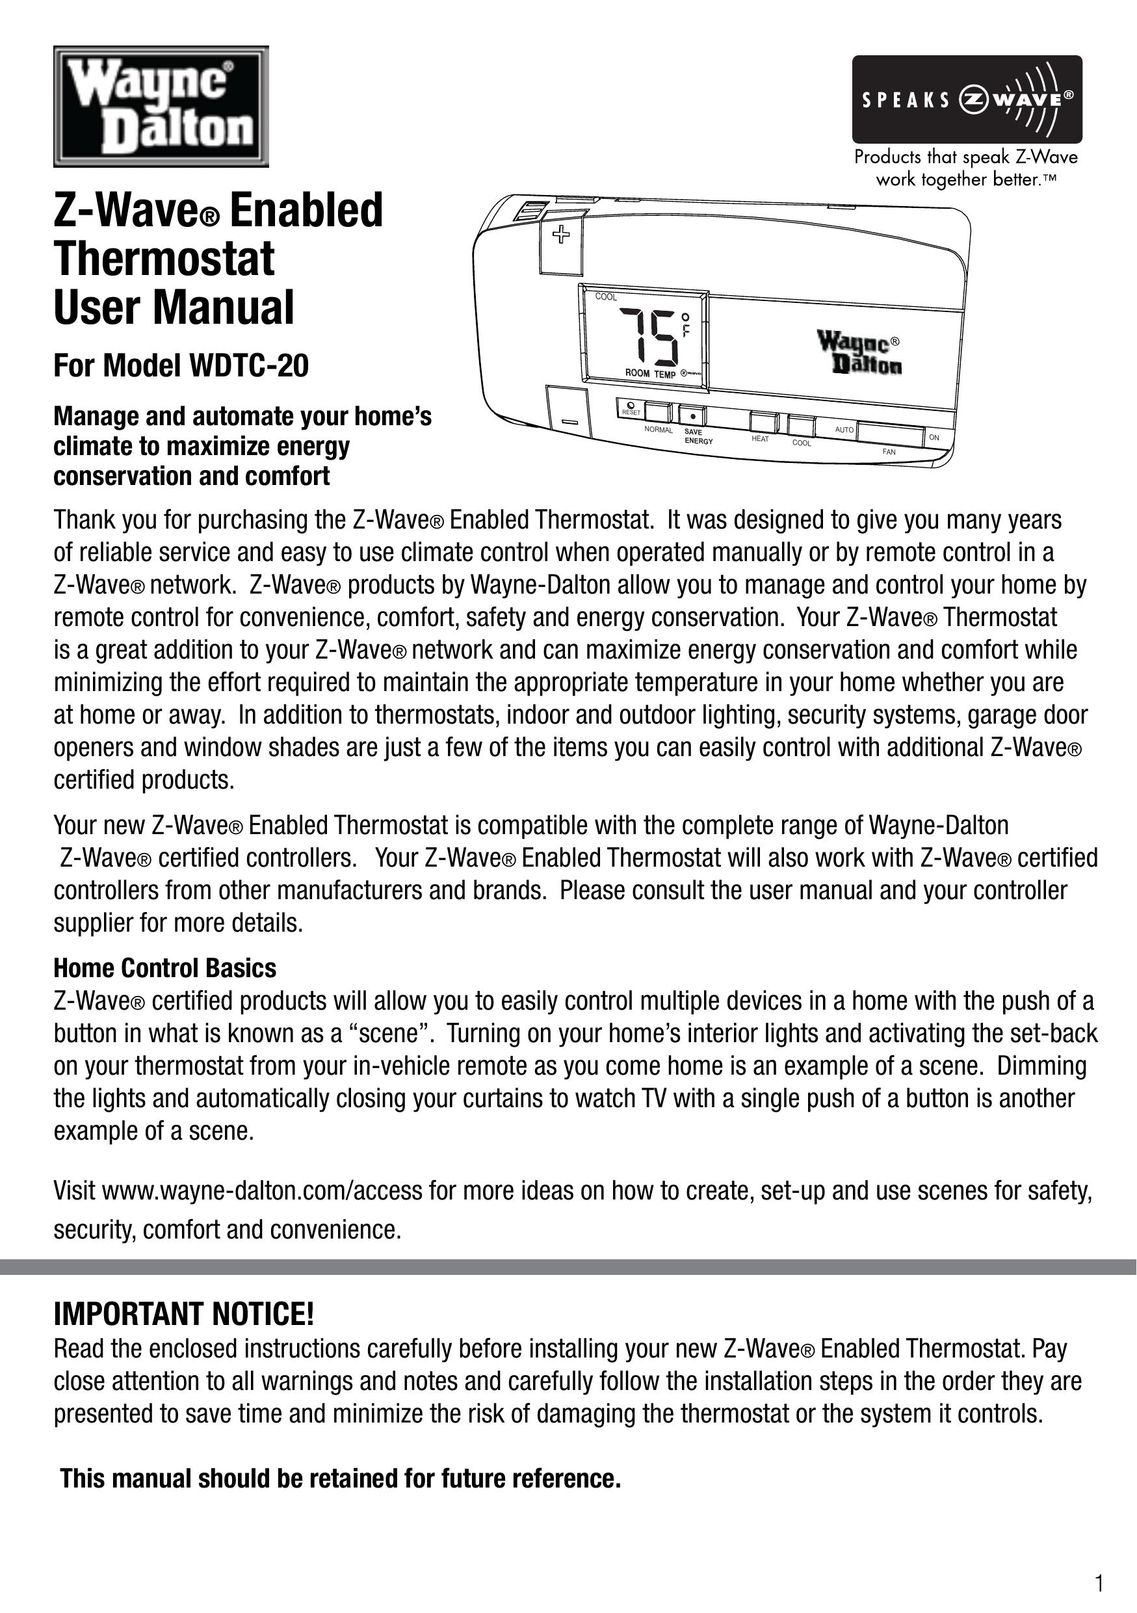 Wayne-Dalton WDTC-20 Thermostat User Manual